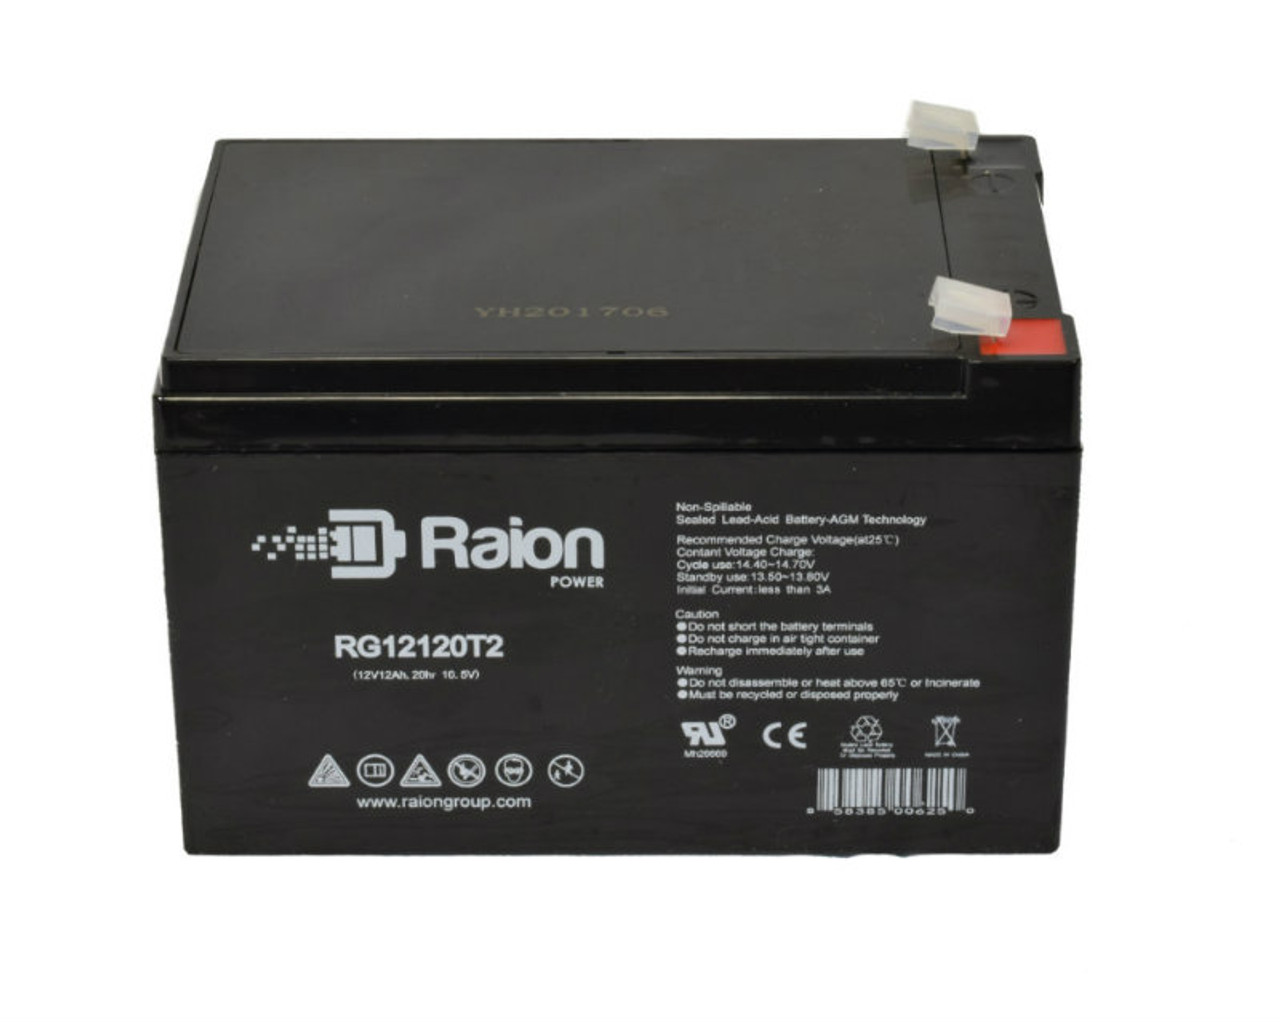 Raion Power RG12120T2 SLA Battery for Chilwee 6-FM-14